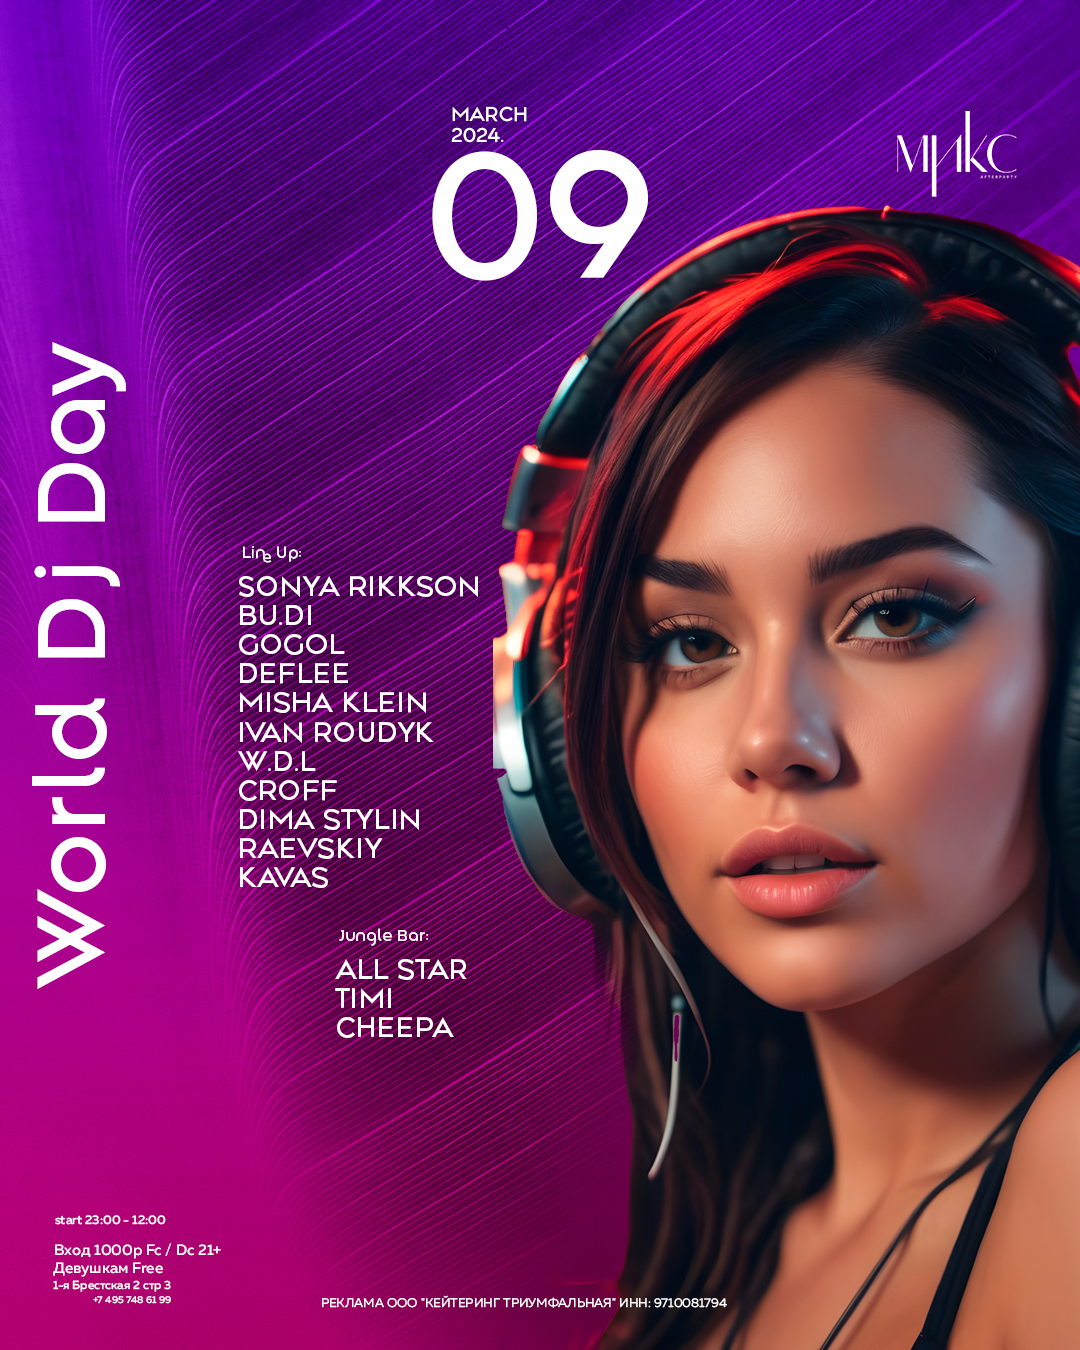 WORLD DJ DAY